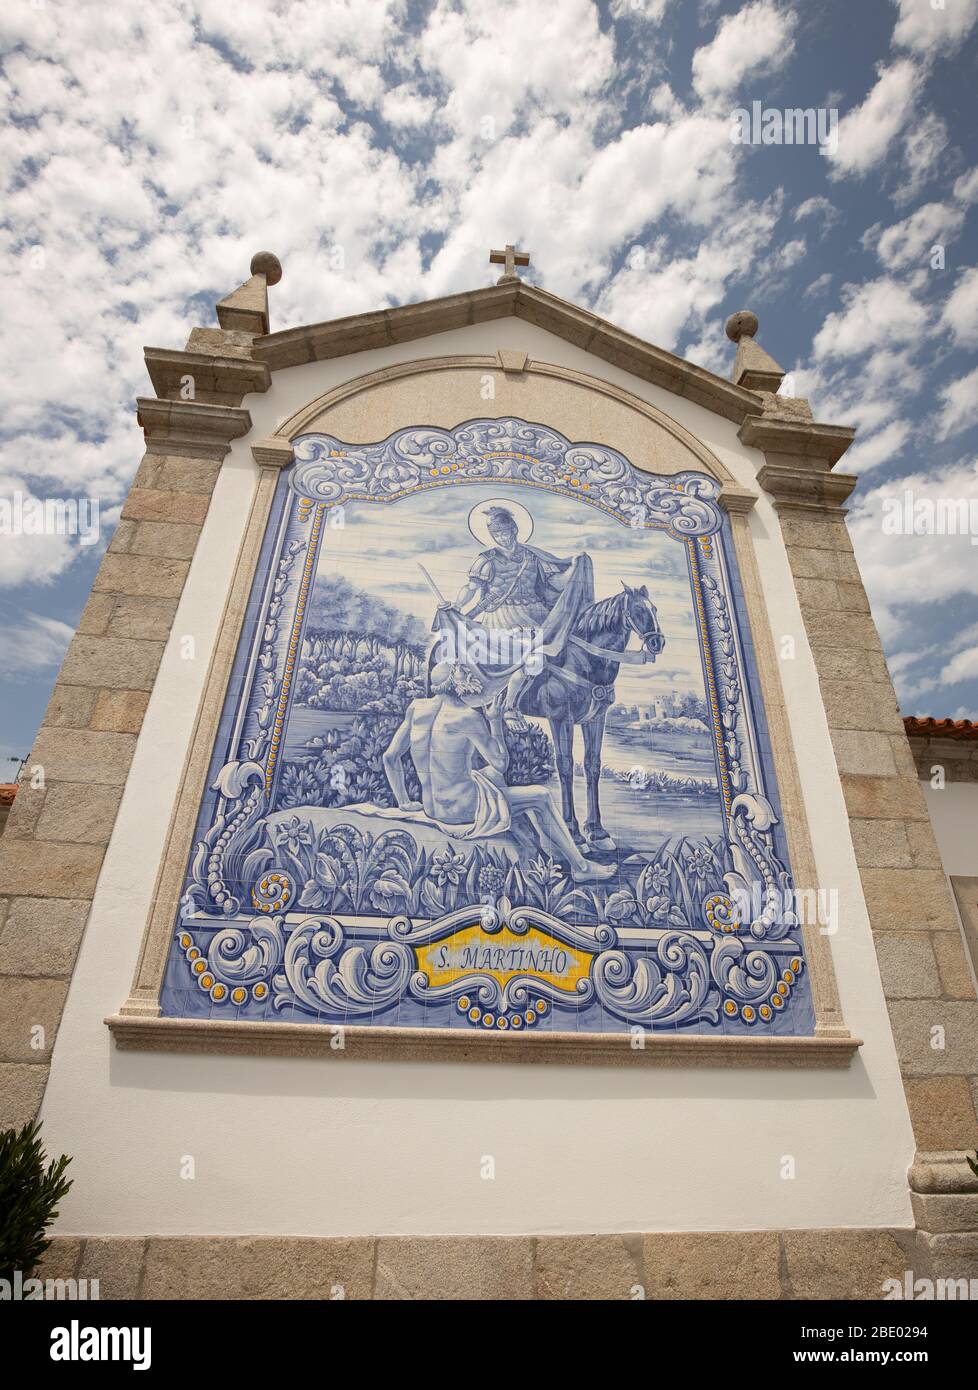 Saint Martinho in detailed blue azulejo tiles on the gable wall at Freixieiro de Soutelo church dating back to 1258, in Viana do Castelo, Portugal . Stock Photo